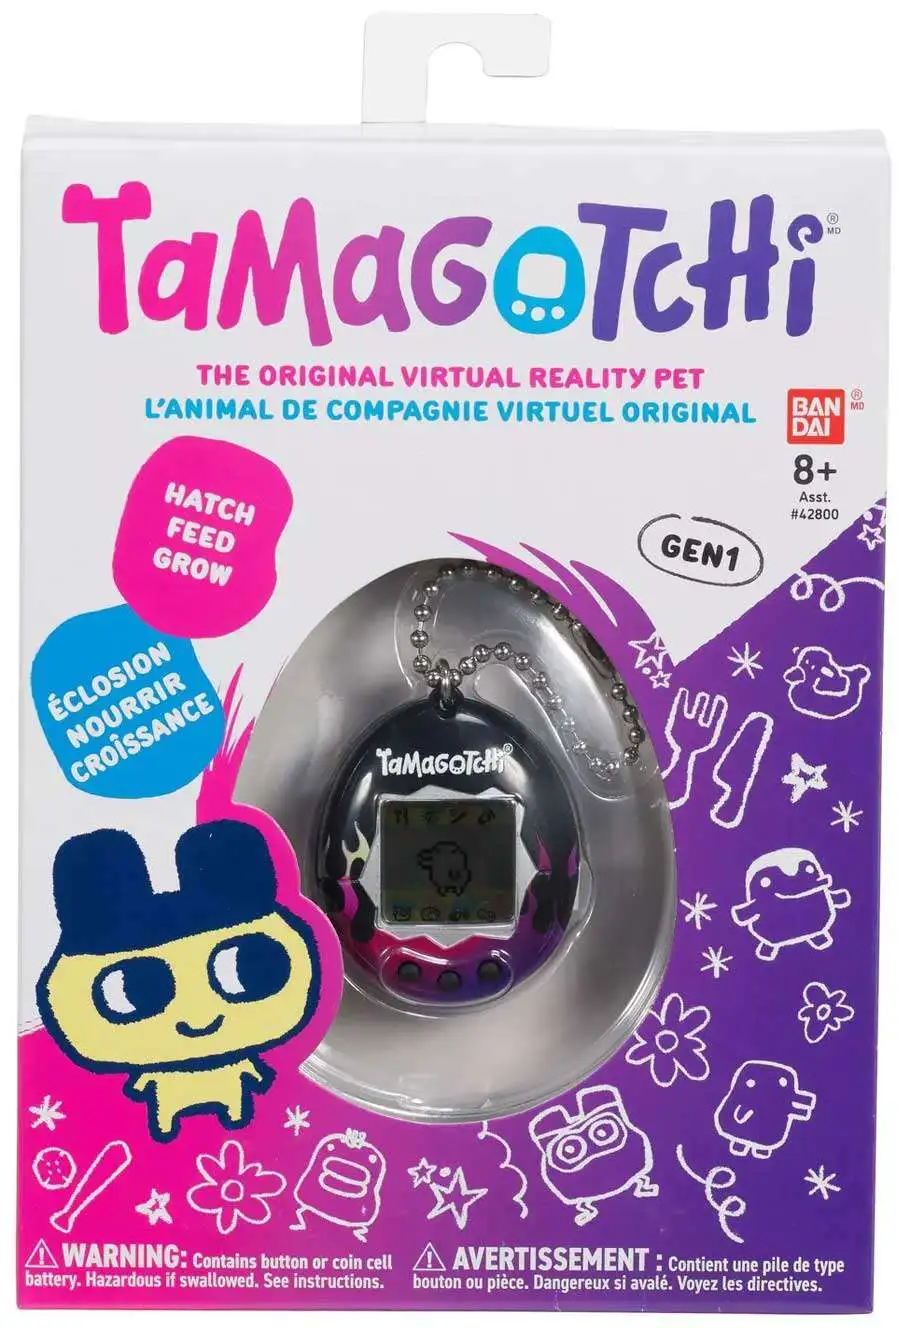 Giga Pets - Animal de compagnie virtuel, édition de collection